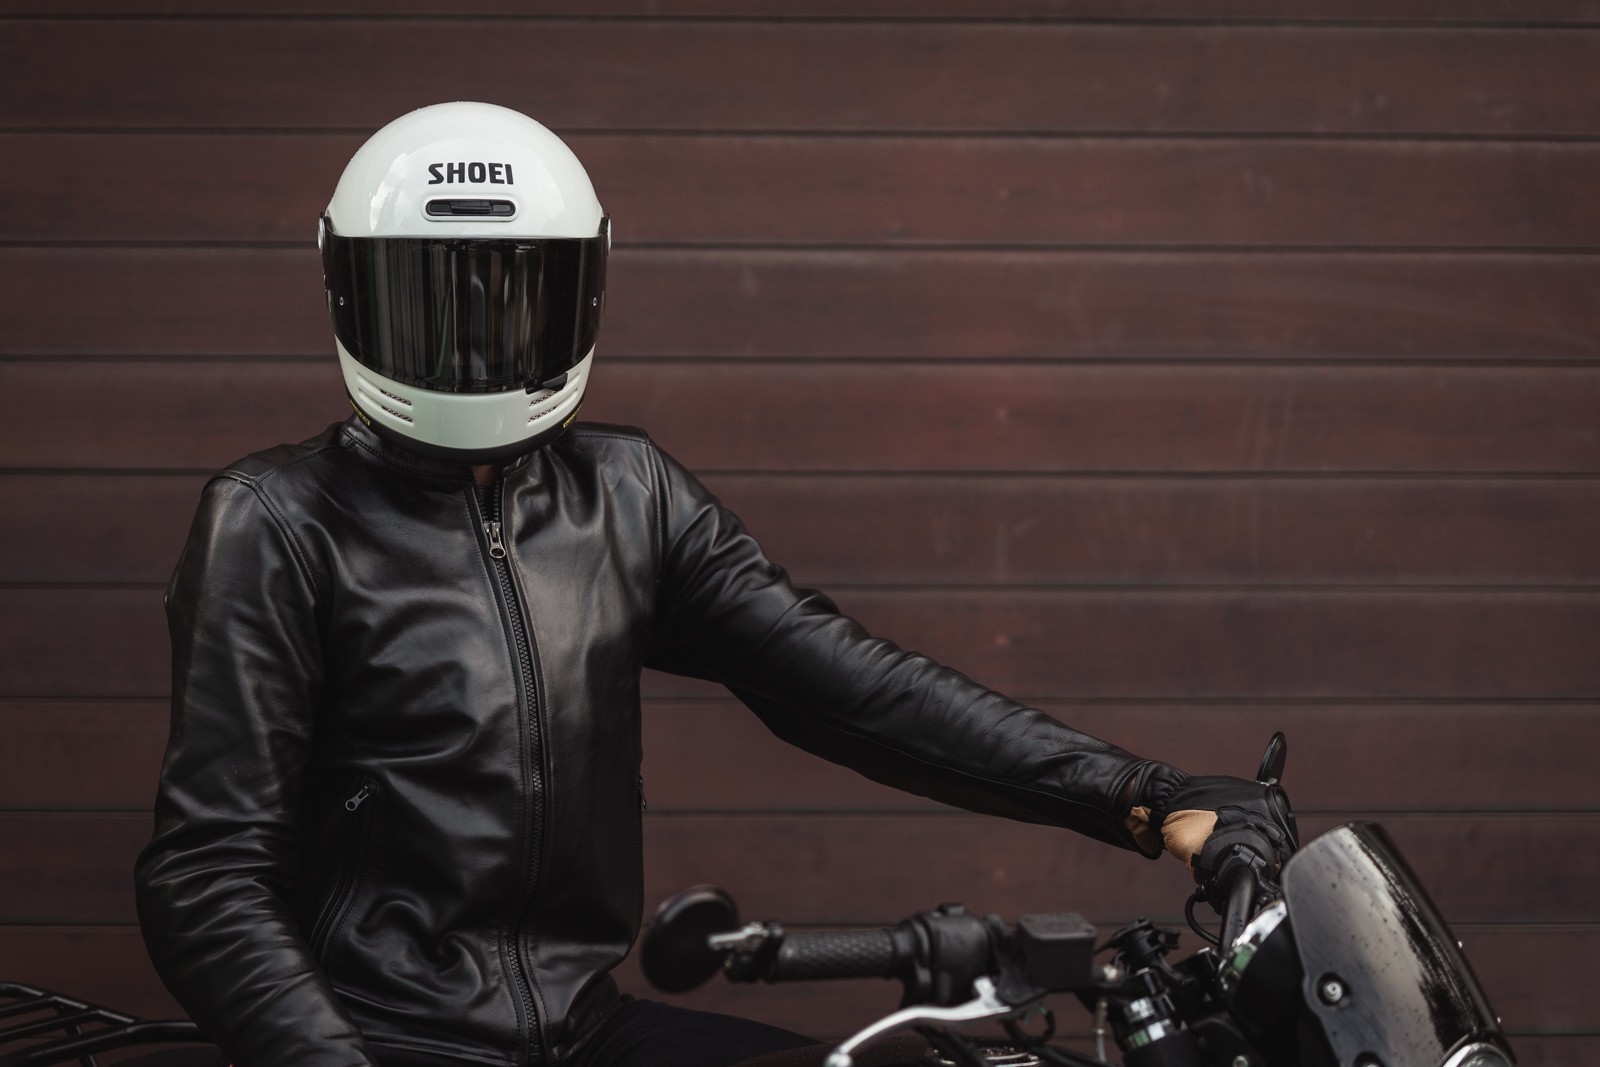 Person wearing Shoei Glamster helmet on motorcycle